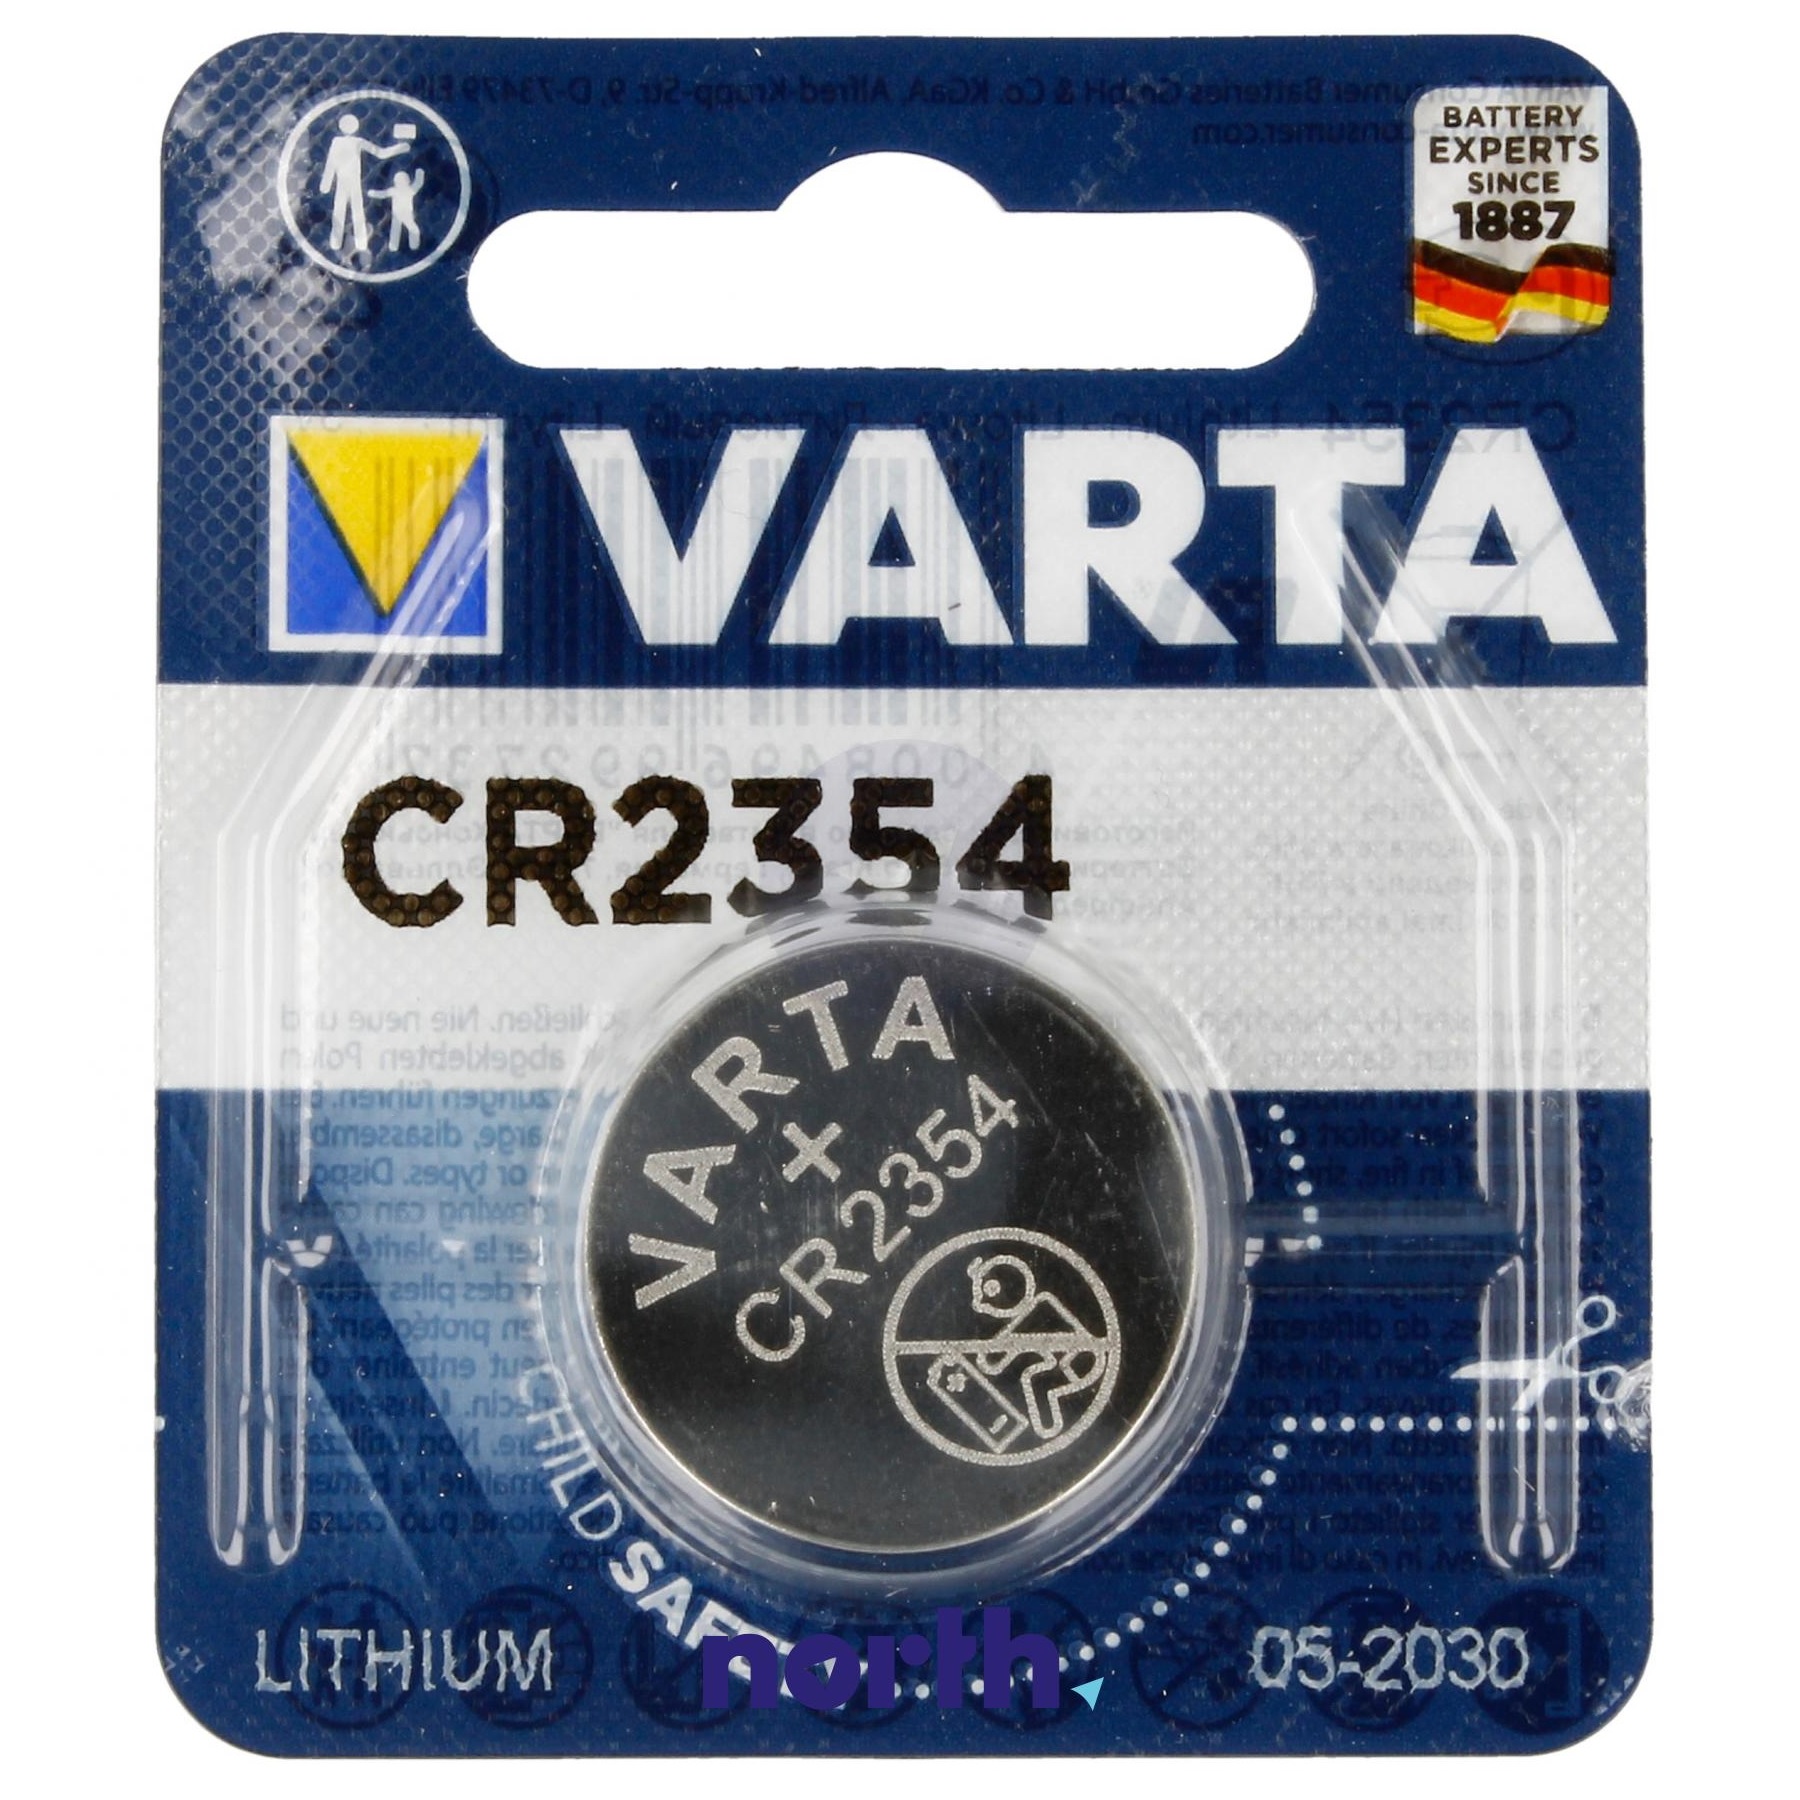 Battery Varta Lithium CR2450 3V